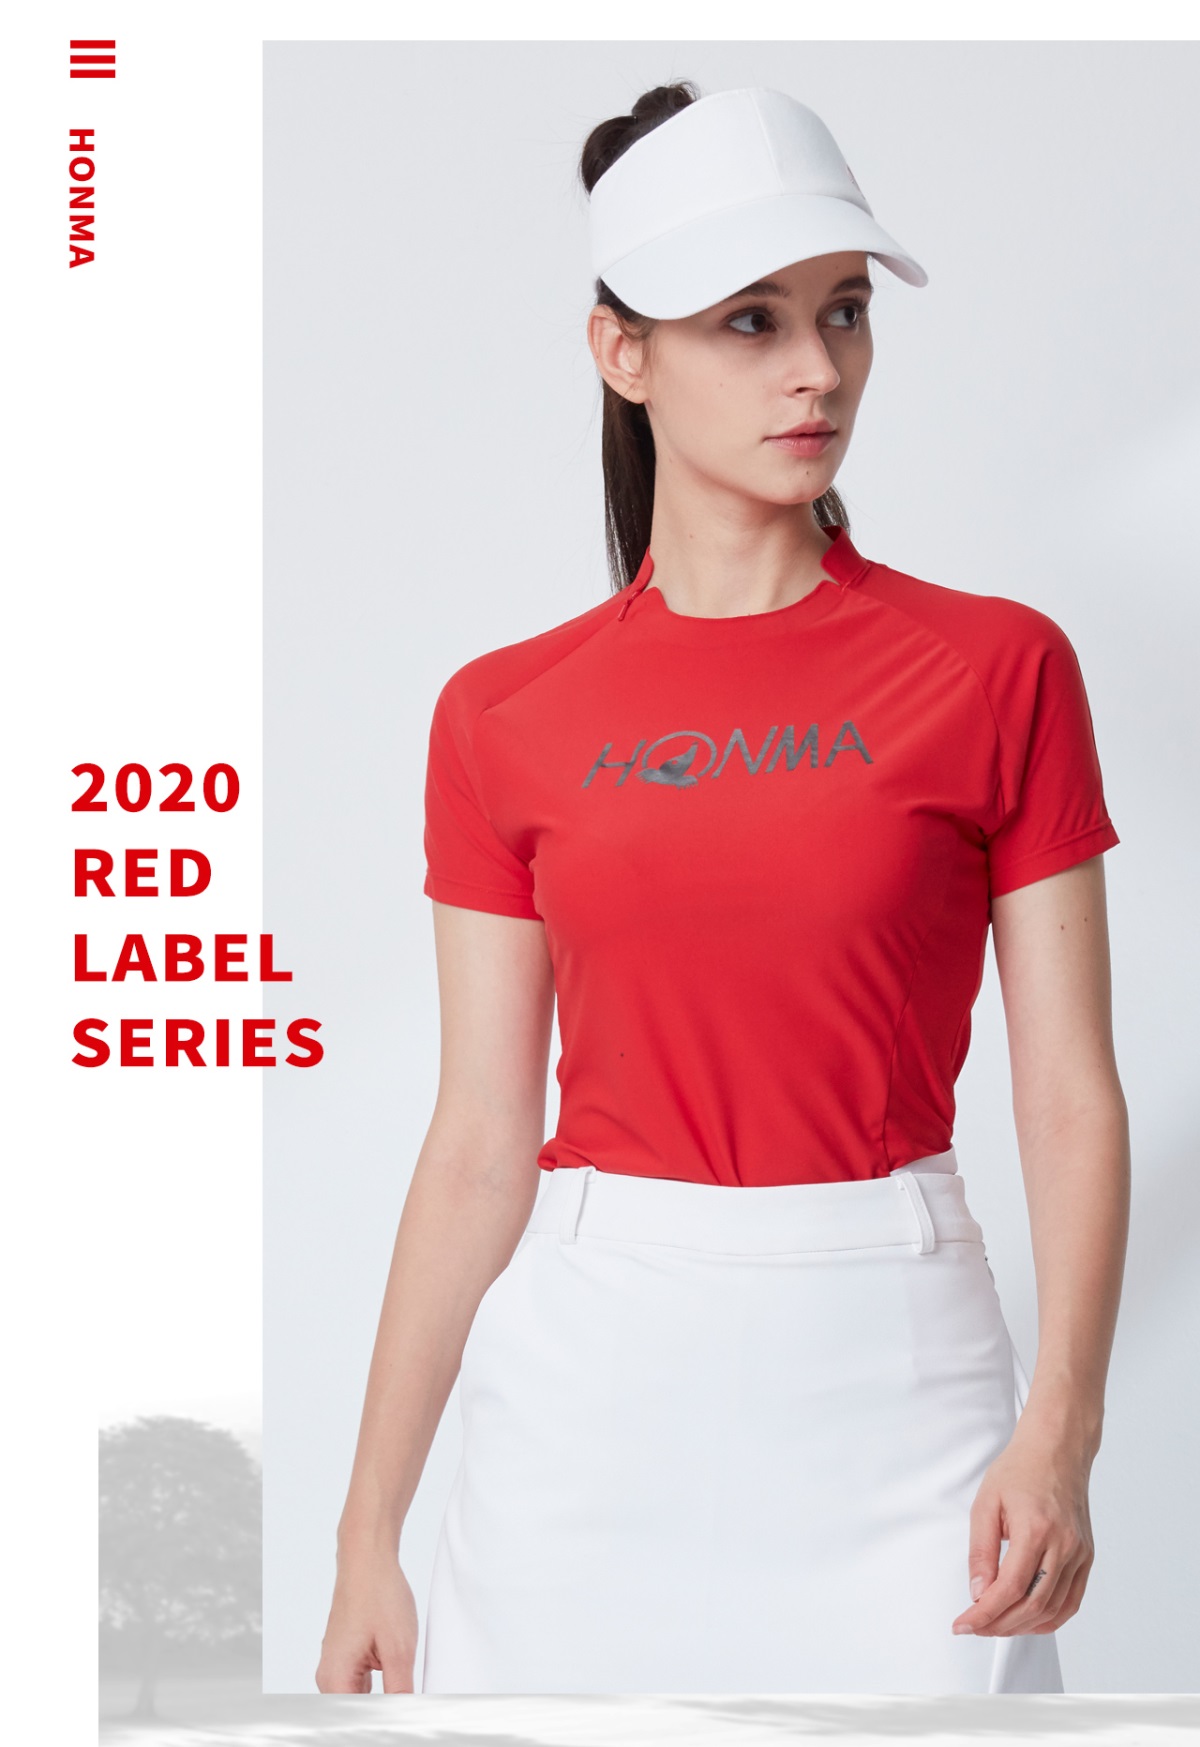 HONMA新款高尔夫女子T恤衫意大利进口面料弹力舒展